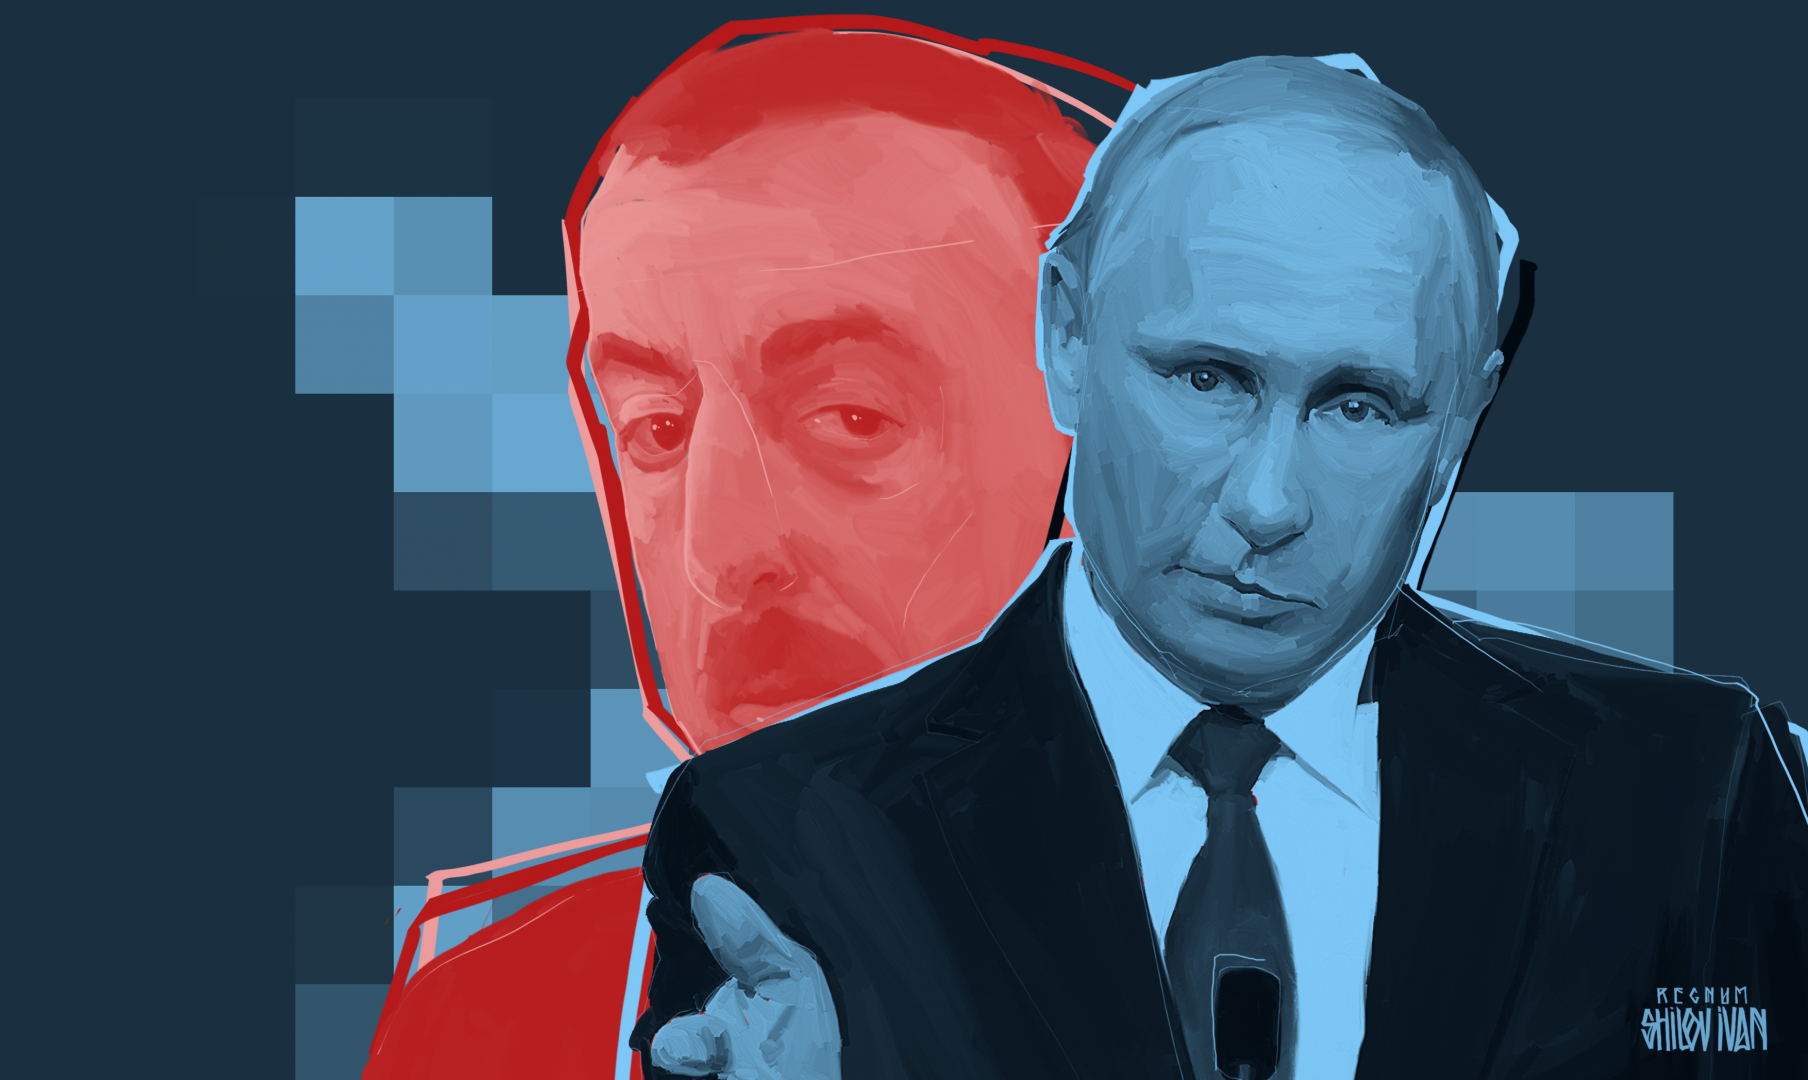 Ильхам Алиев и Владимир Путин 